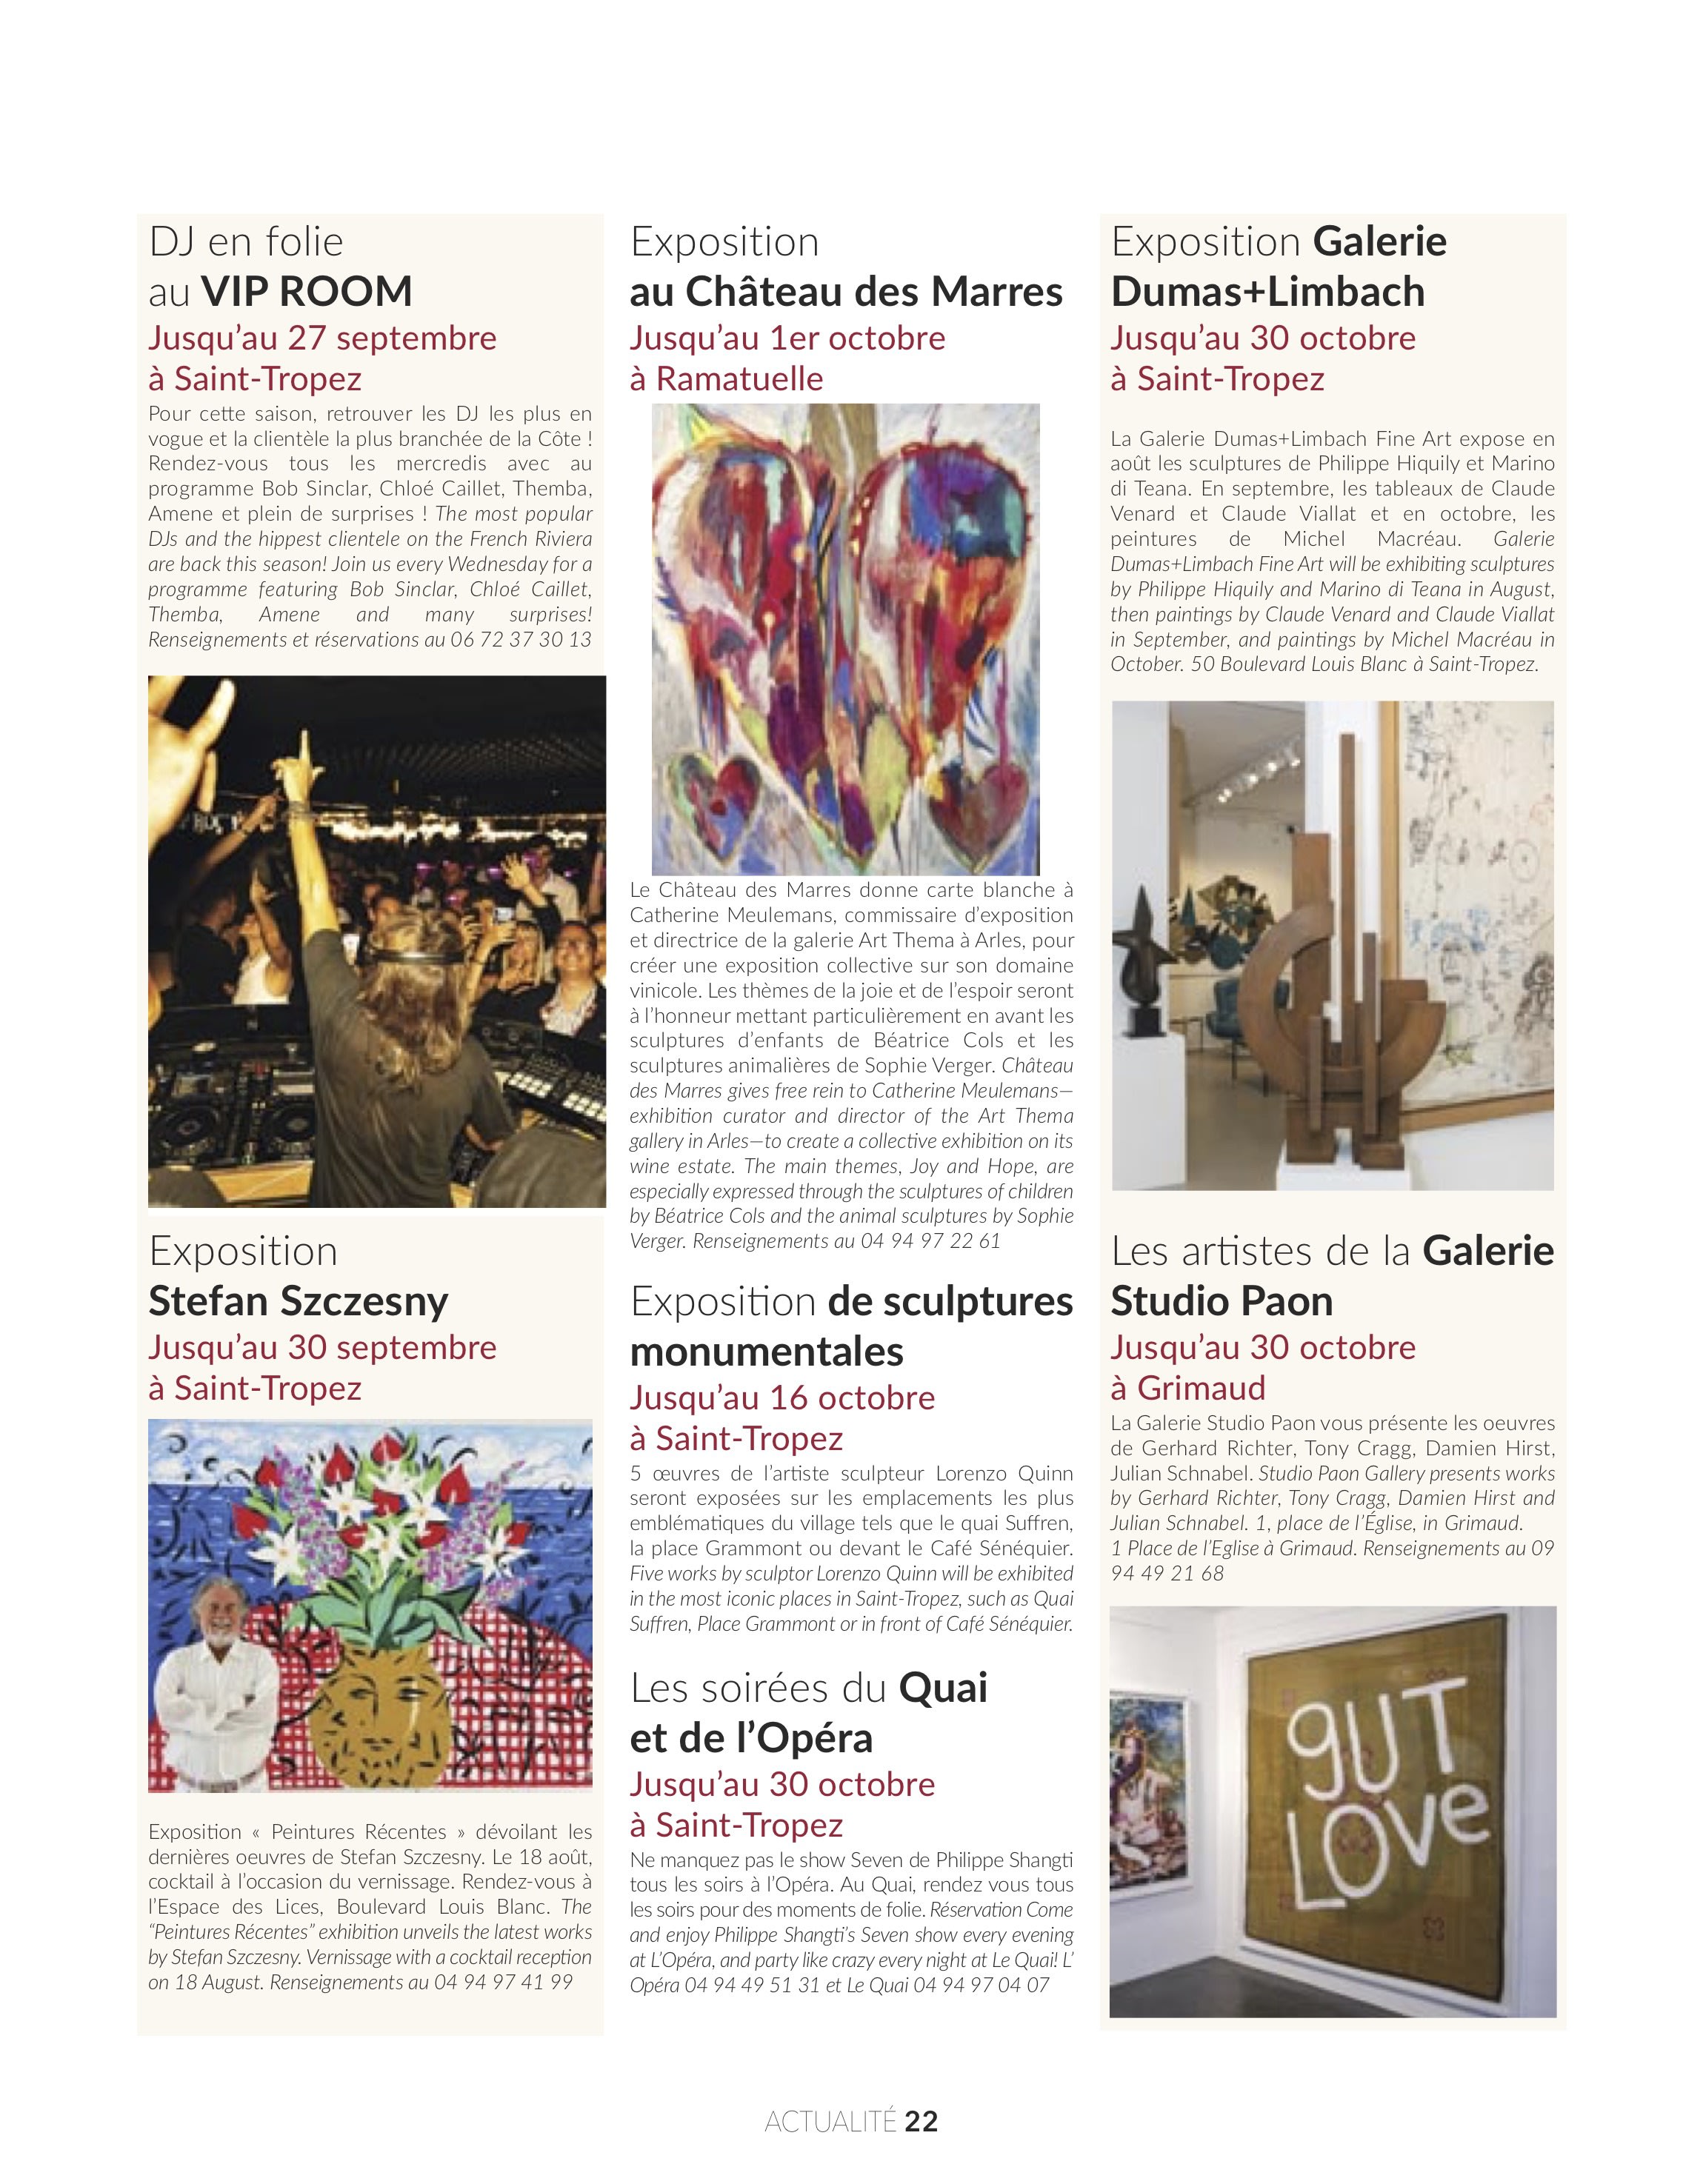 pure magazine, chateau des marres, art thema, summer exhibition, saint tropez, wine and art, migotto